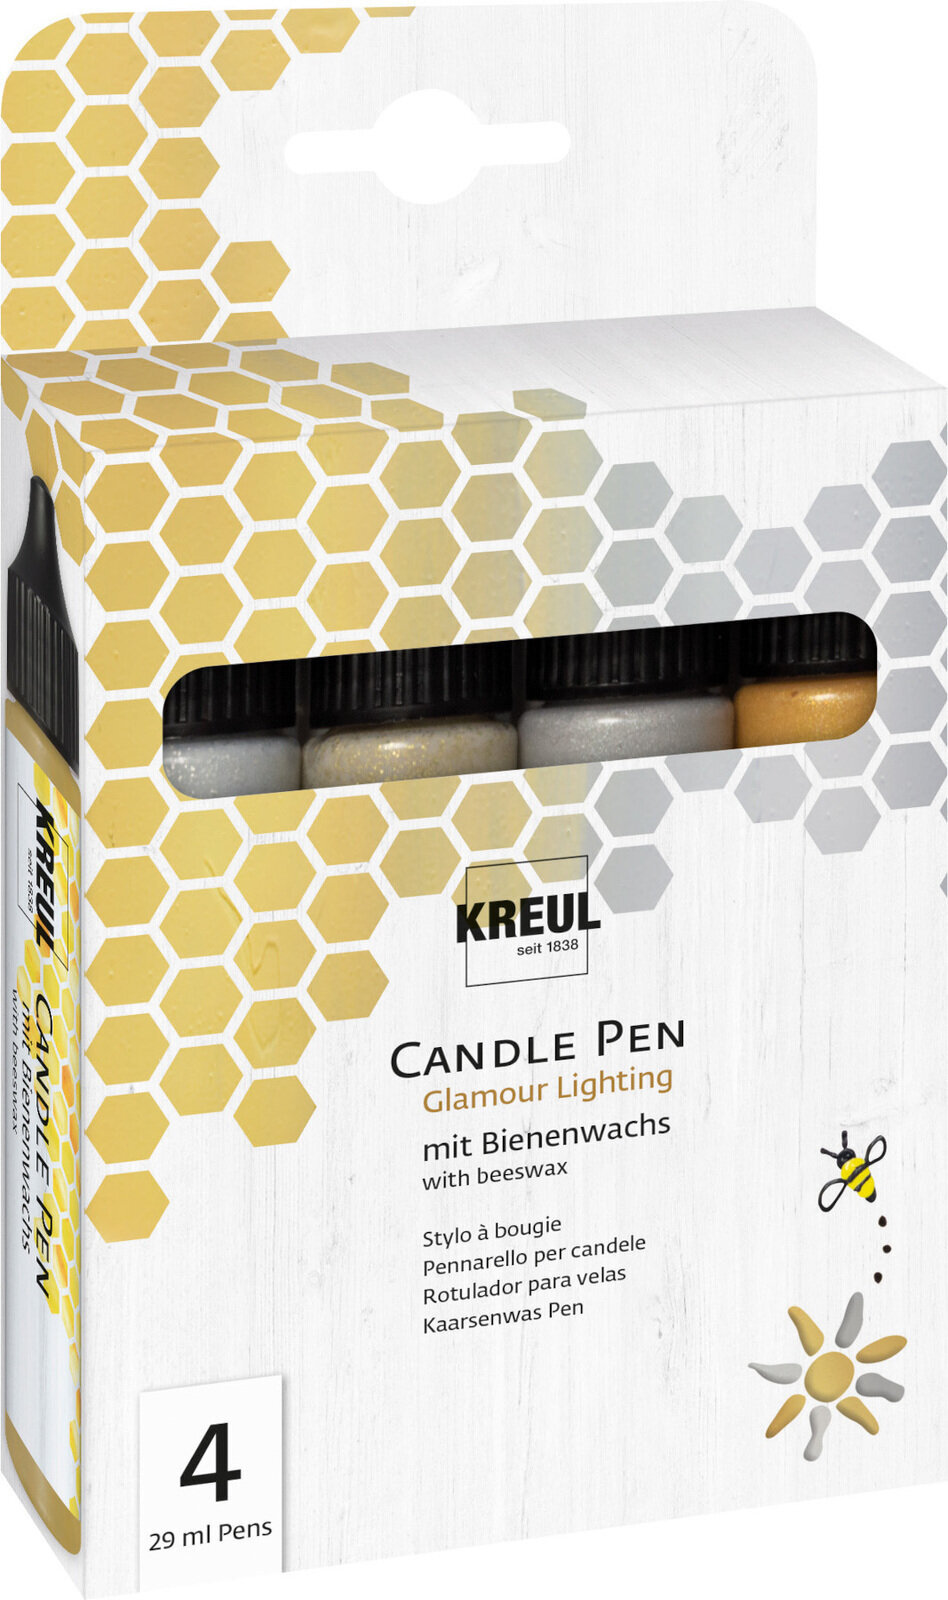 Felt-Tip Pen Kreul Candle Pen Glamour Lighting Set